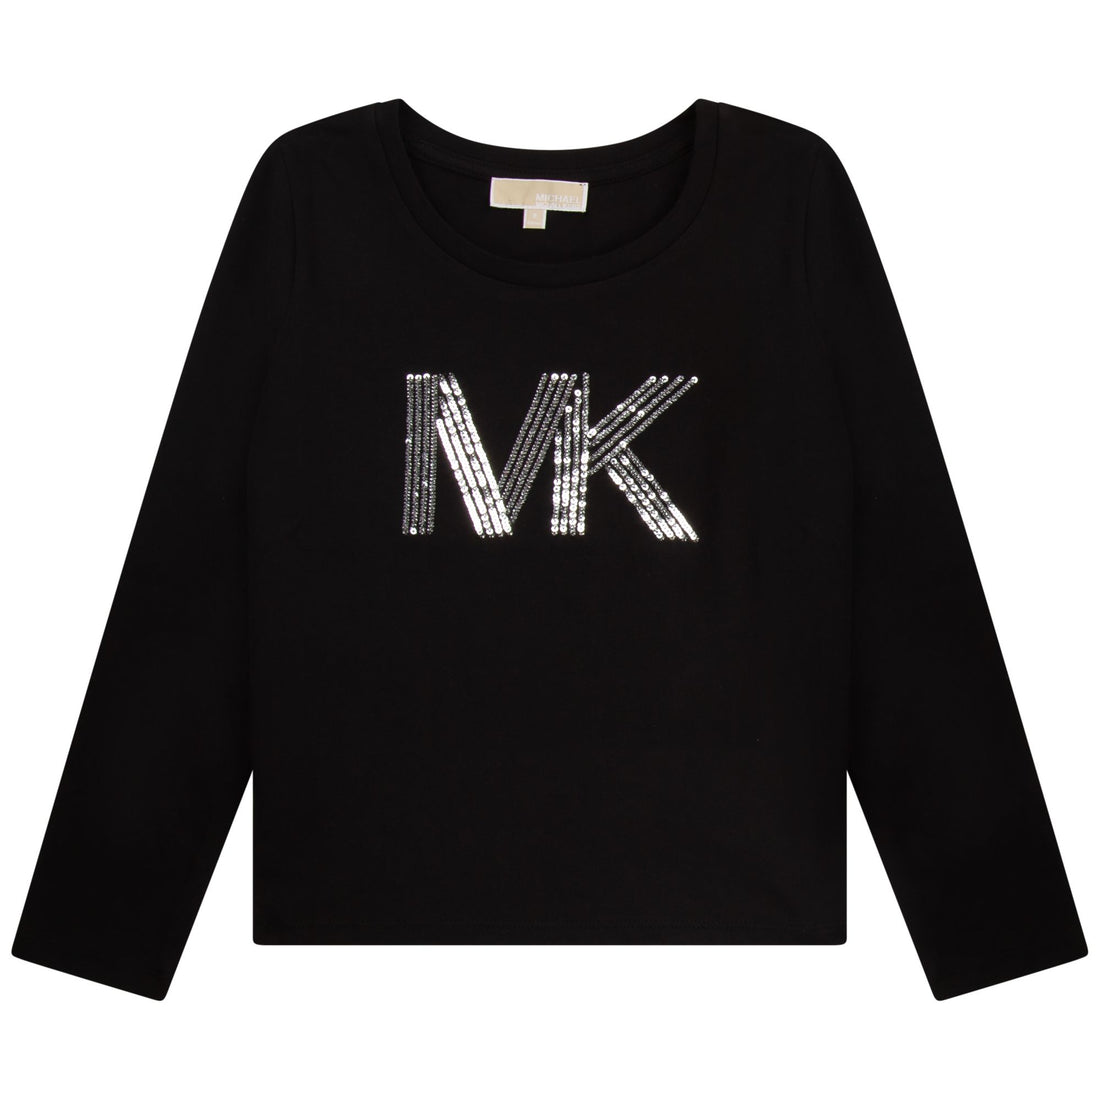 Michael Kors Long Sleeve T-Shirt Style: R15121